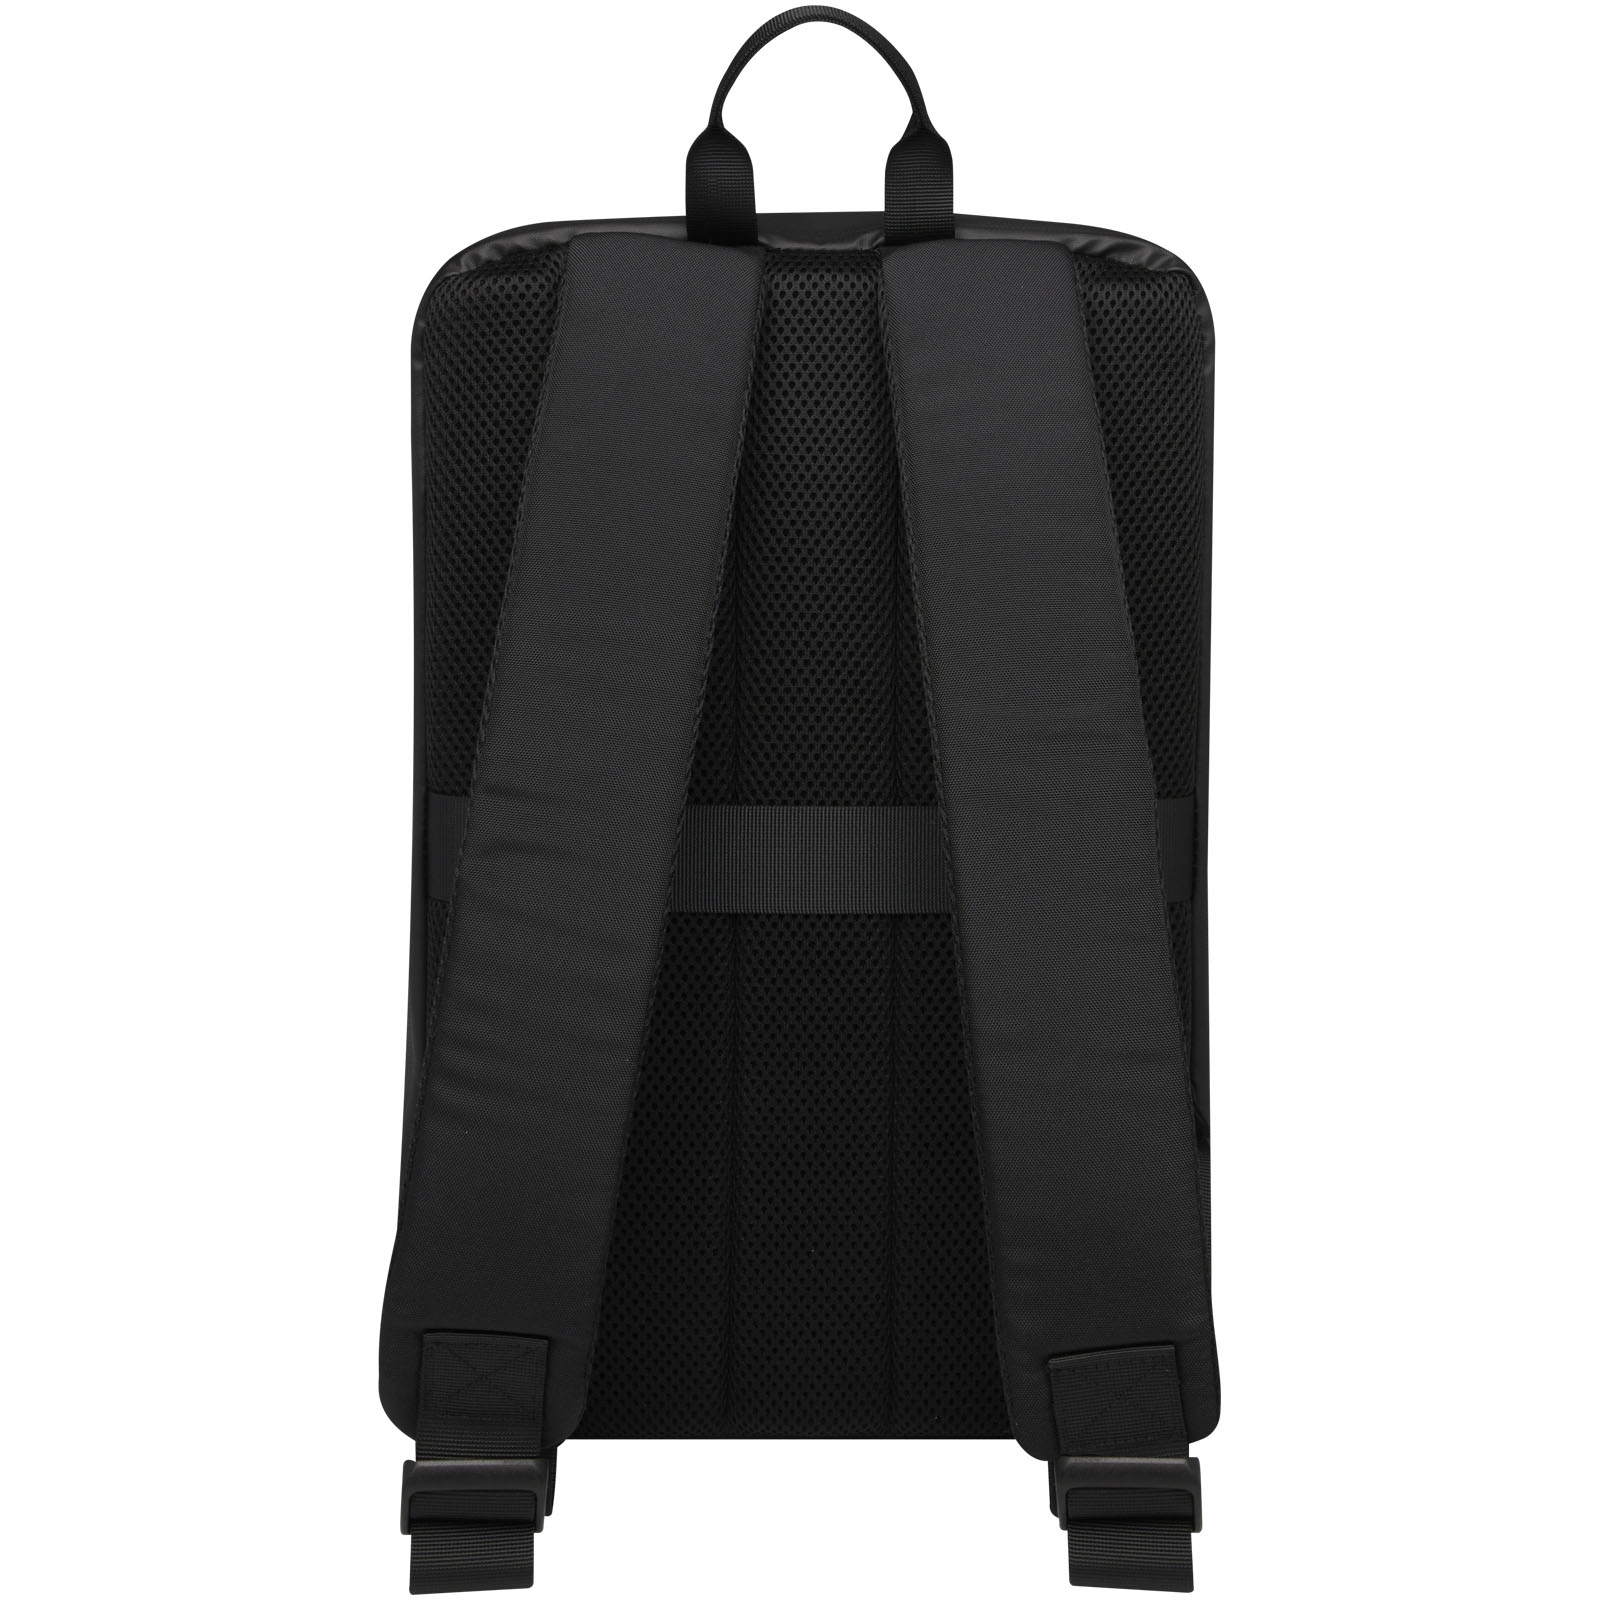 Advertising Laptop Backpacks - Rise 15.6